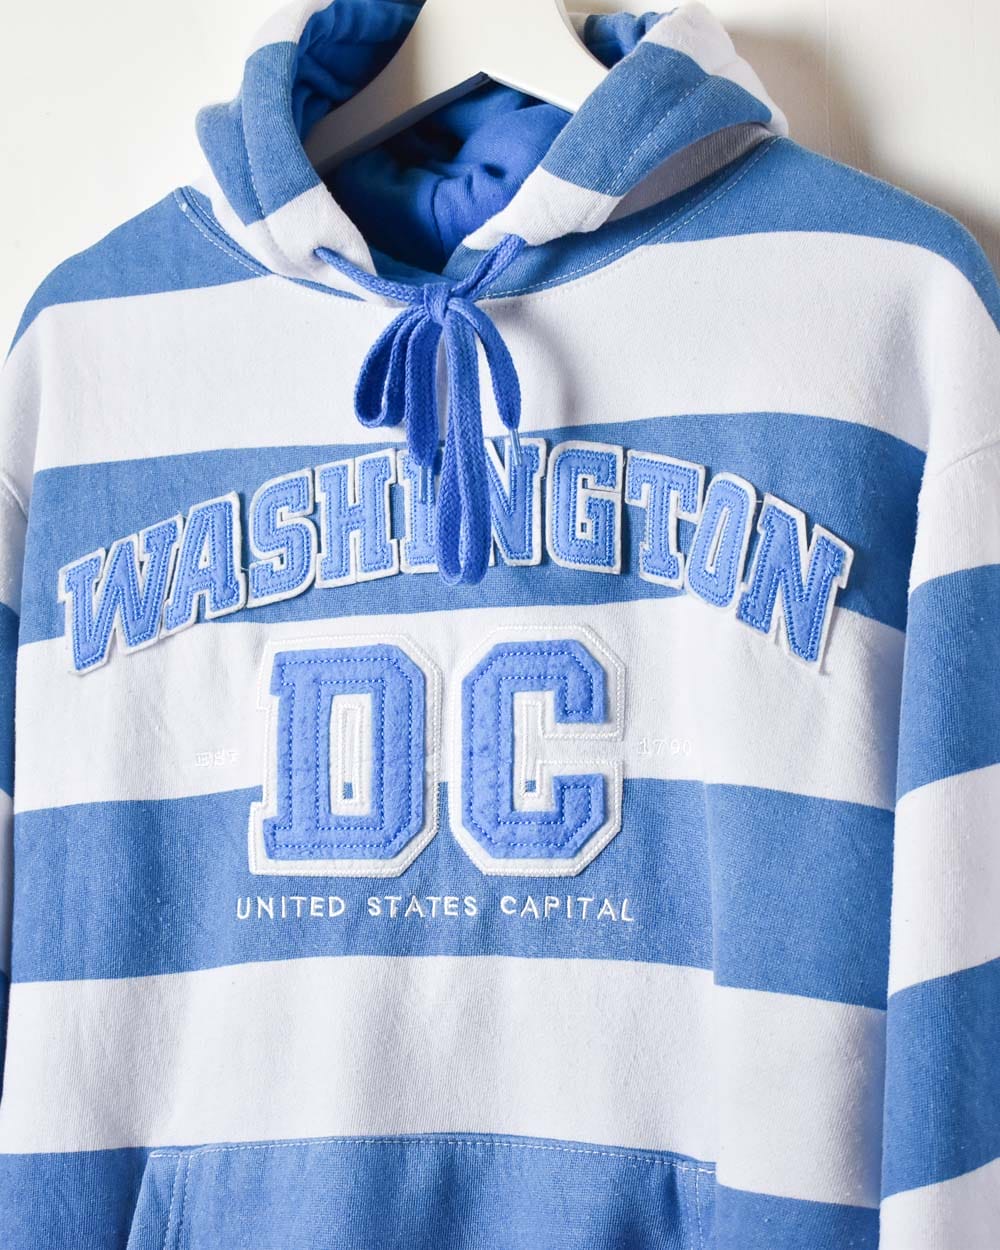 White Washington DC Striped Hoodie - Small